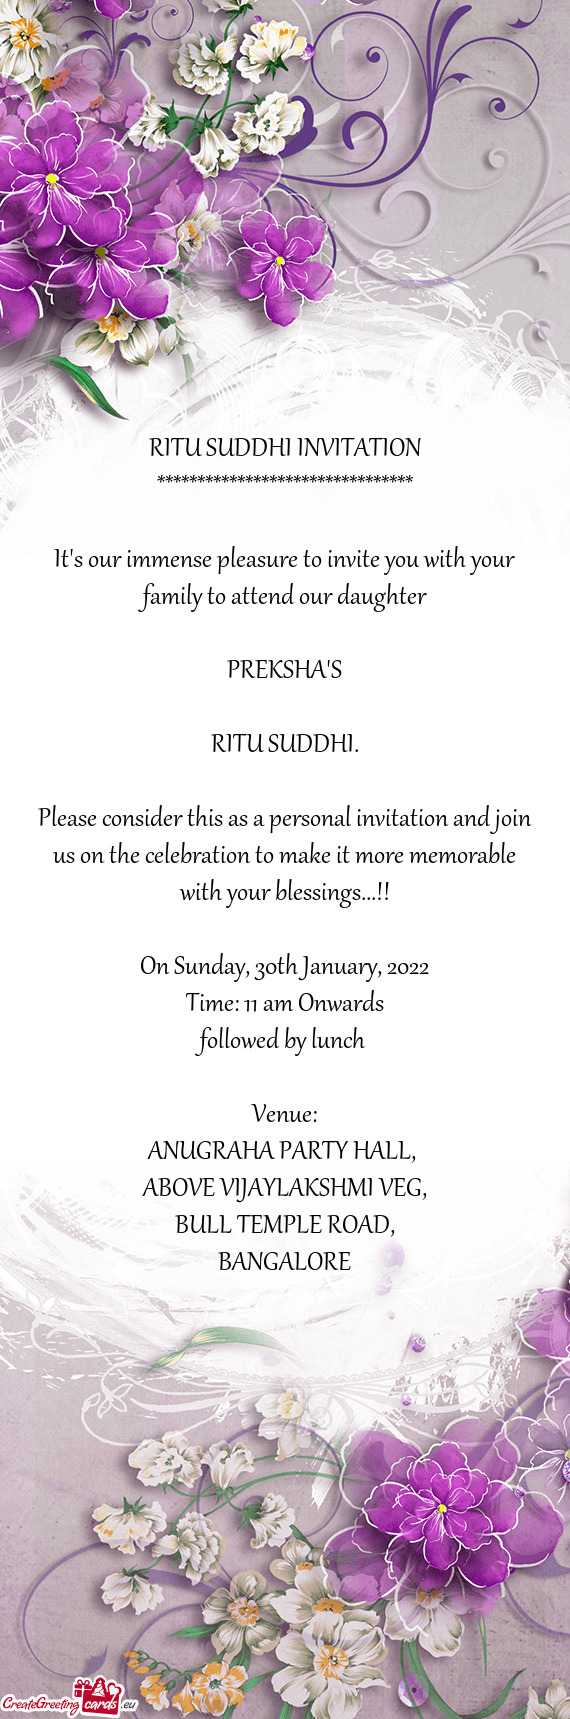 RITU SUDDHI INVITATION